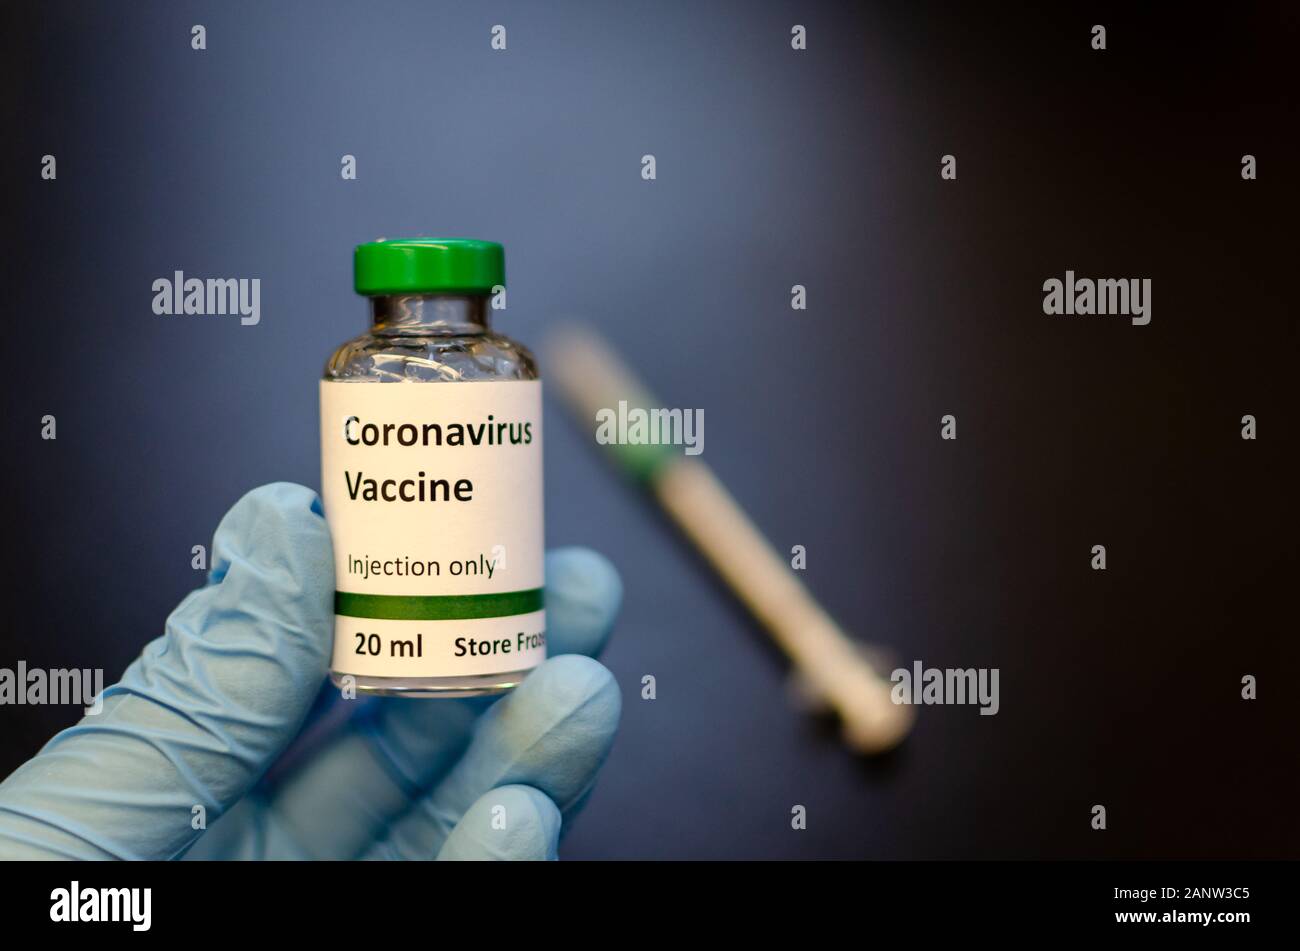 Coronavirus vaccine vial with injection syringe Stock Photo